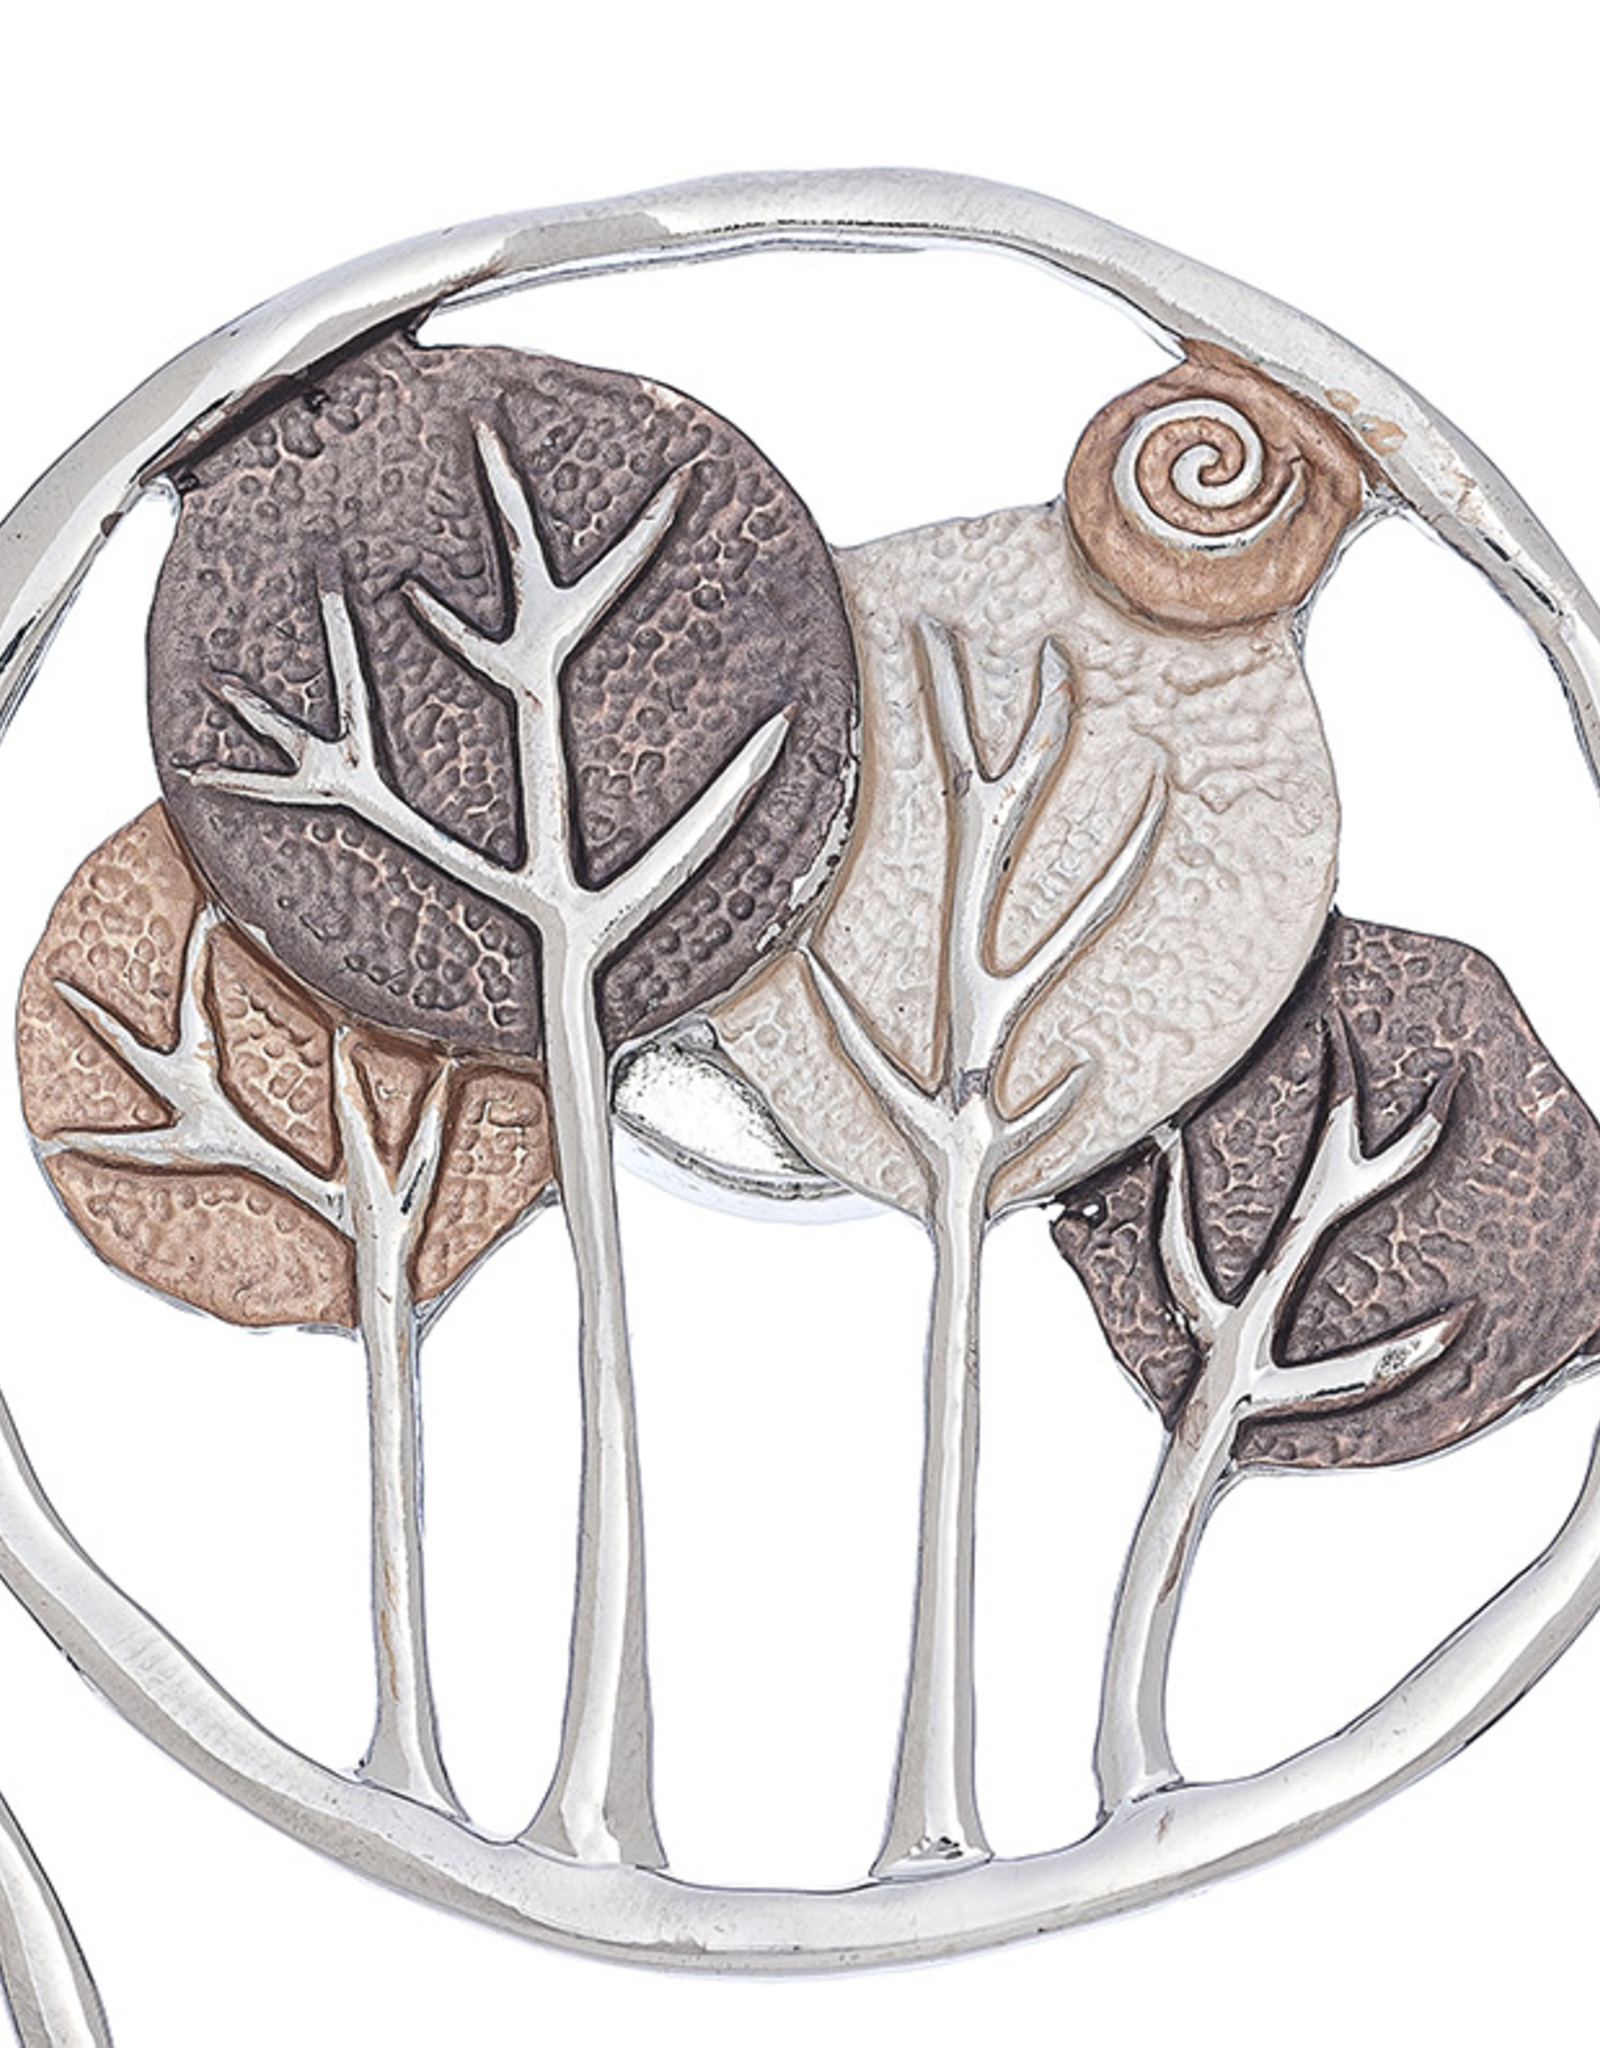 Howards Magnetic Brooch Circle Tree Design brown/tan